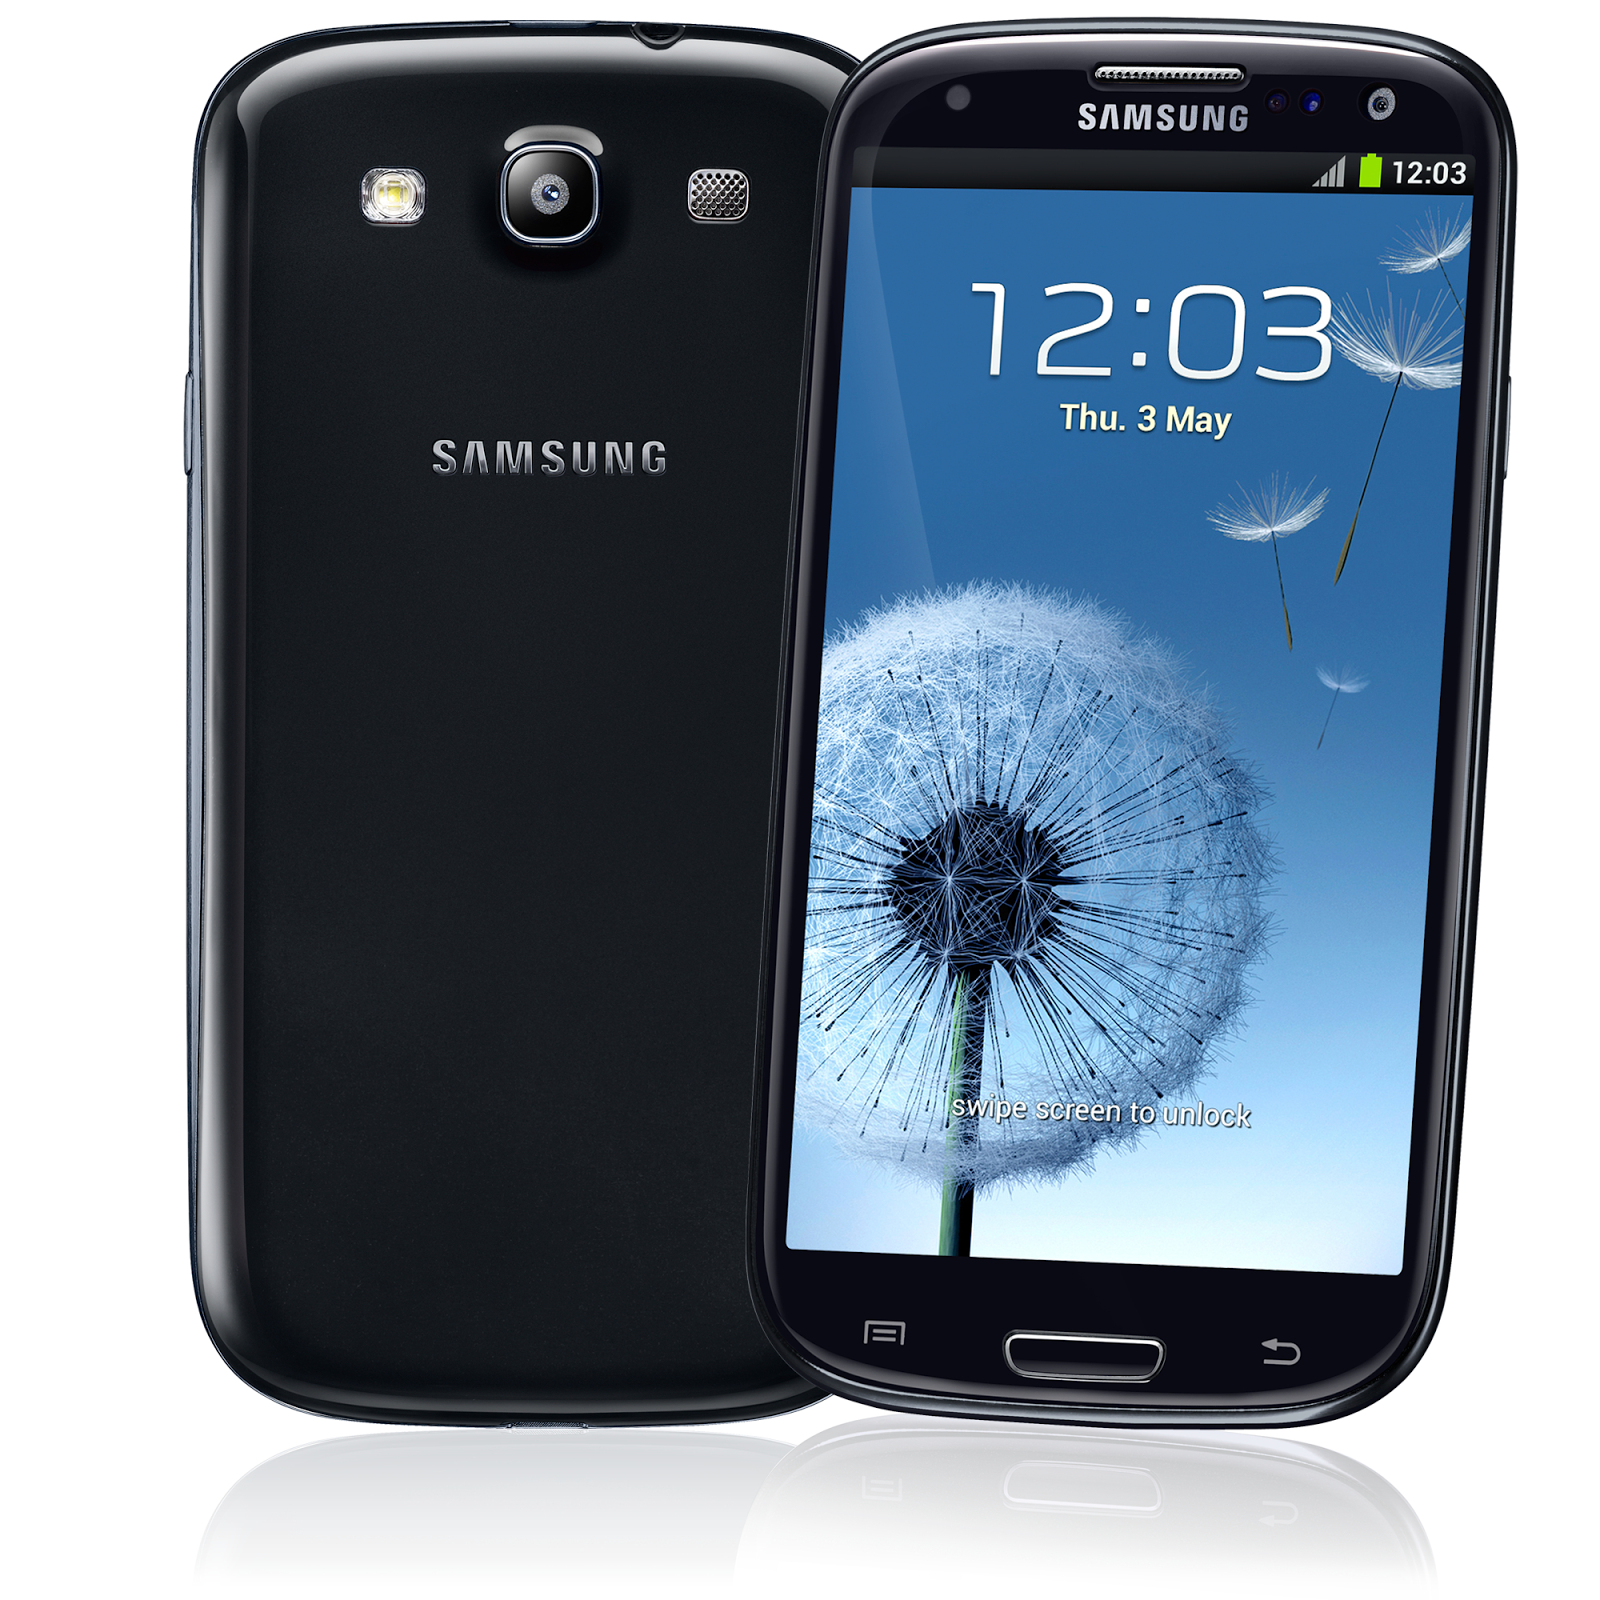 Harga dan Spesifikasi HP Samsung Galaxy S3 Neo Terbaru